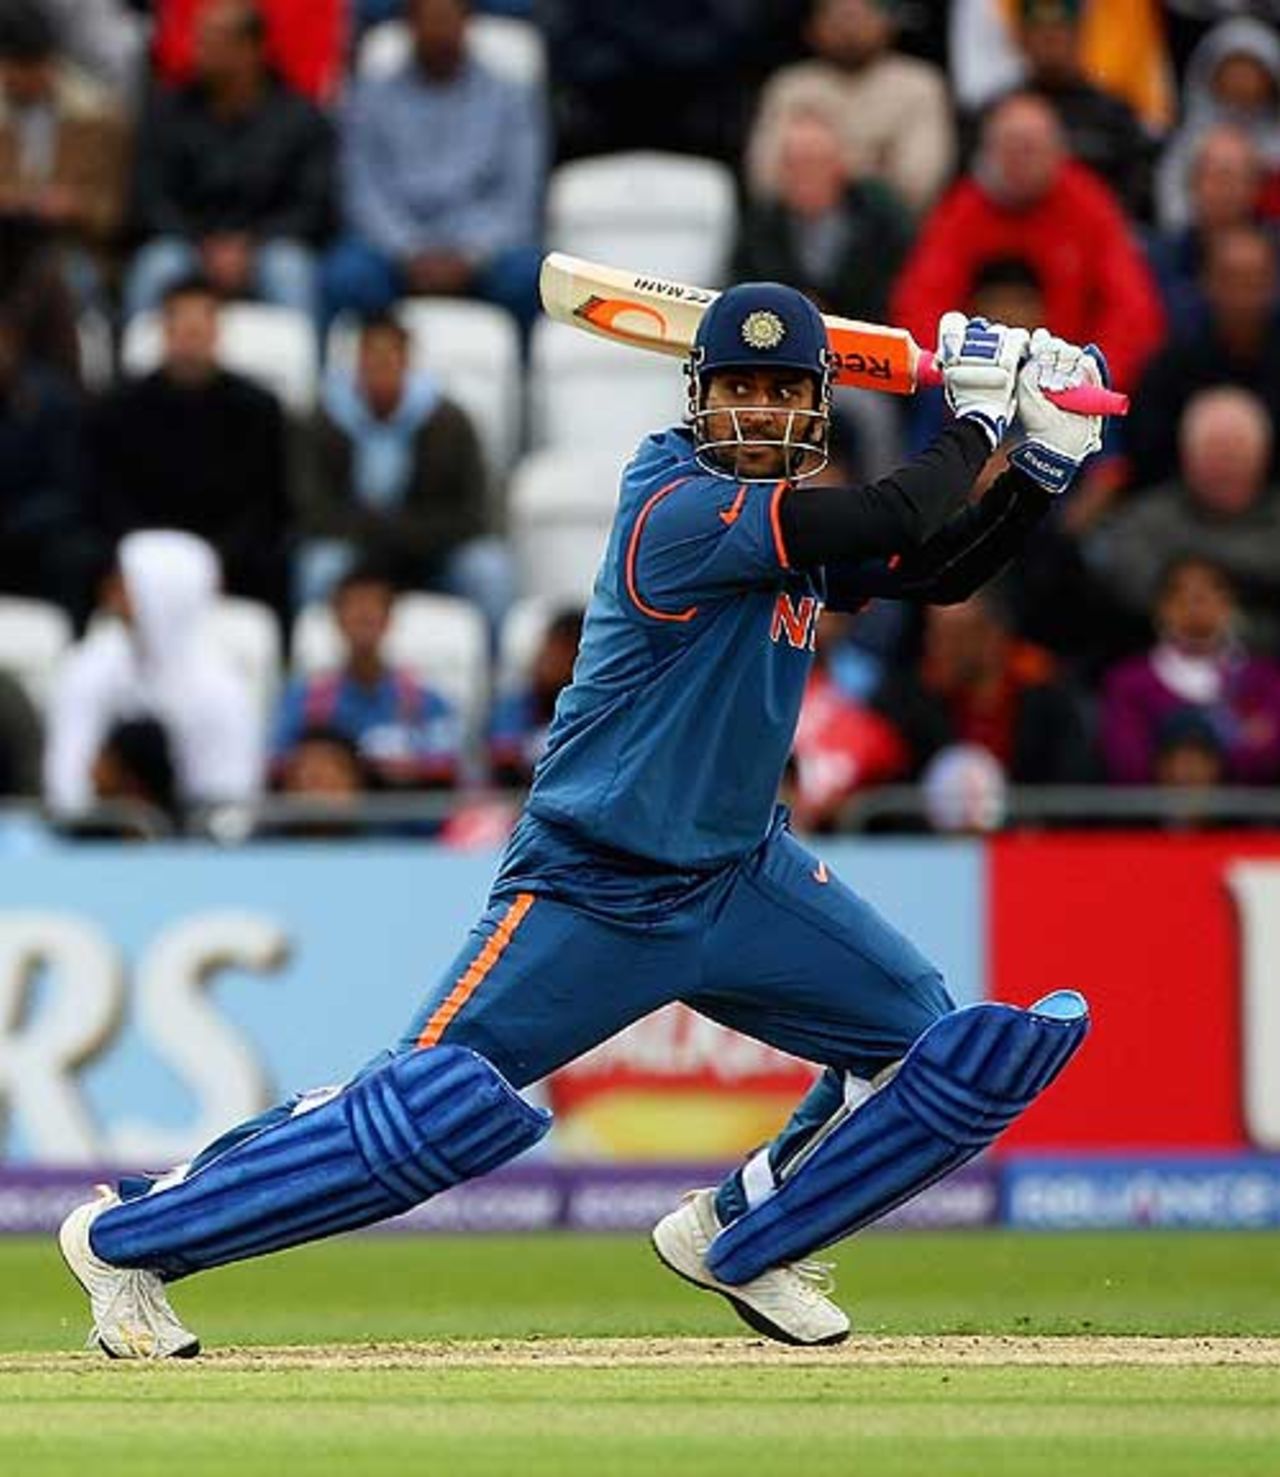 MS Dhoni cuts the ball past backward point, Bangladesh v India, ICC World Twenty20, Trent Bridge, June 6, 2009